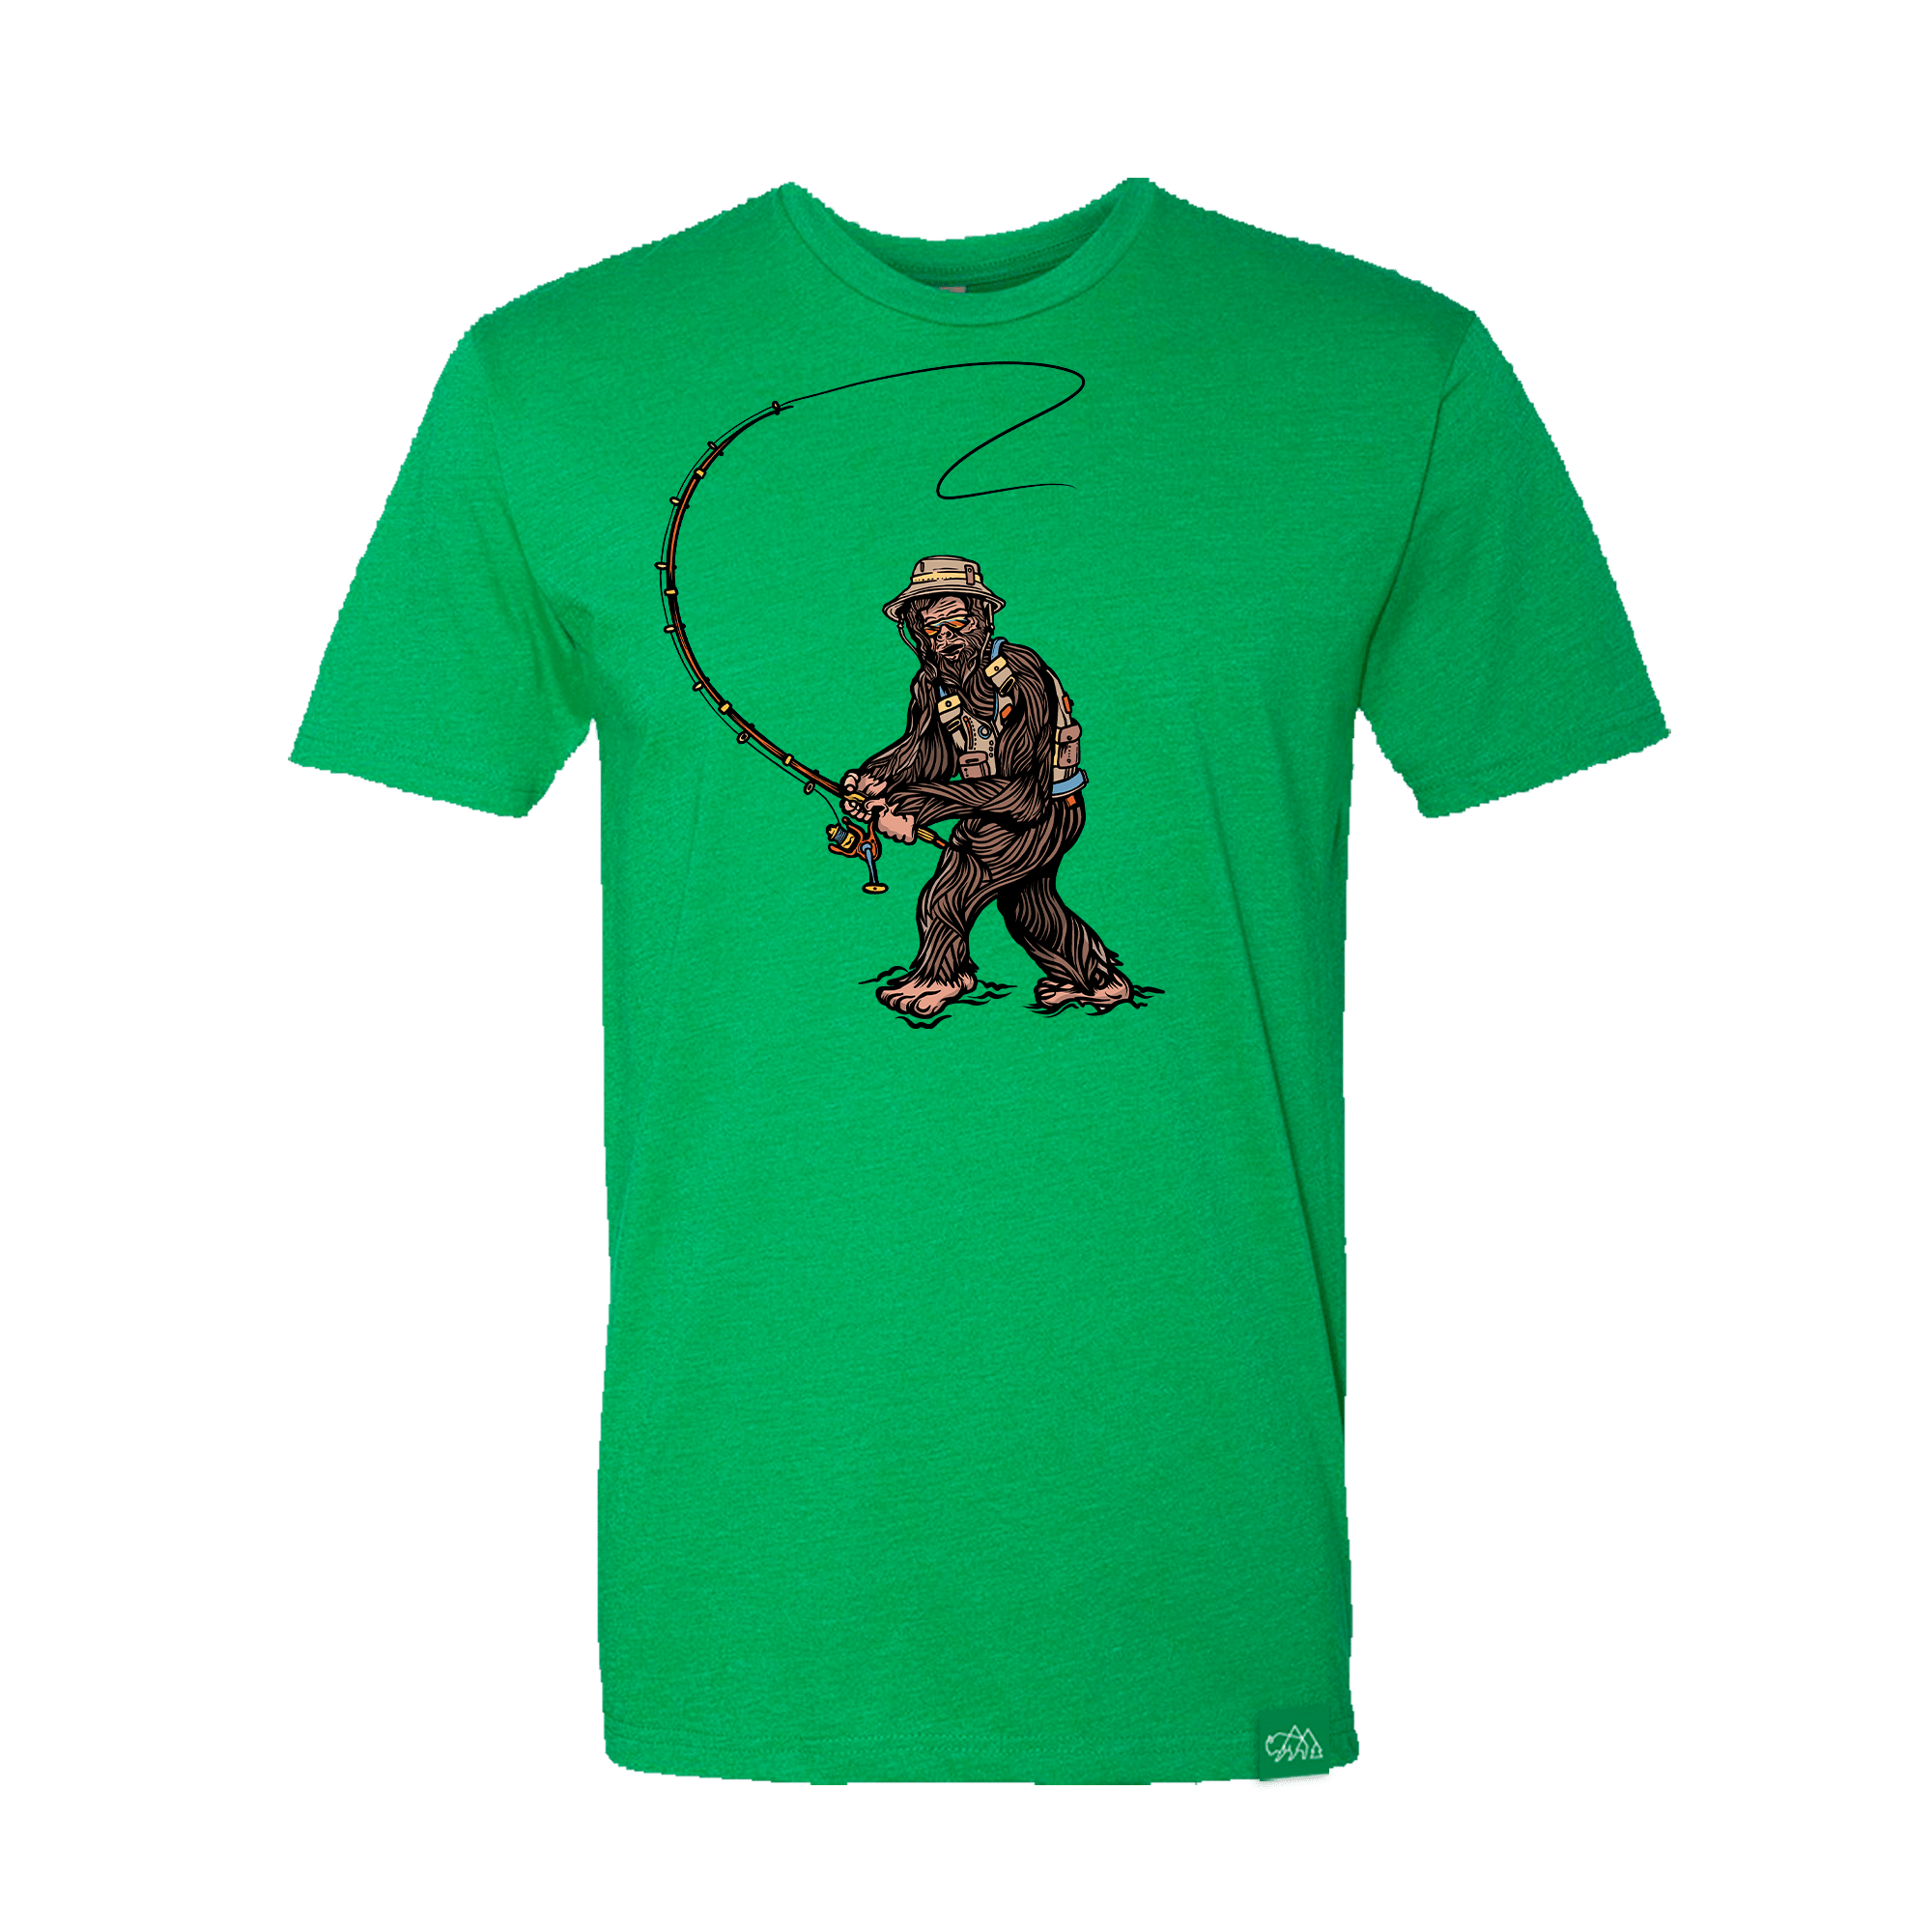 Gone Fishing T-Shirt, Fishing Enthusiast Gift